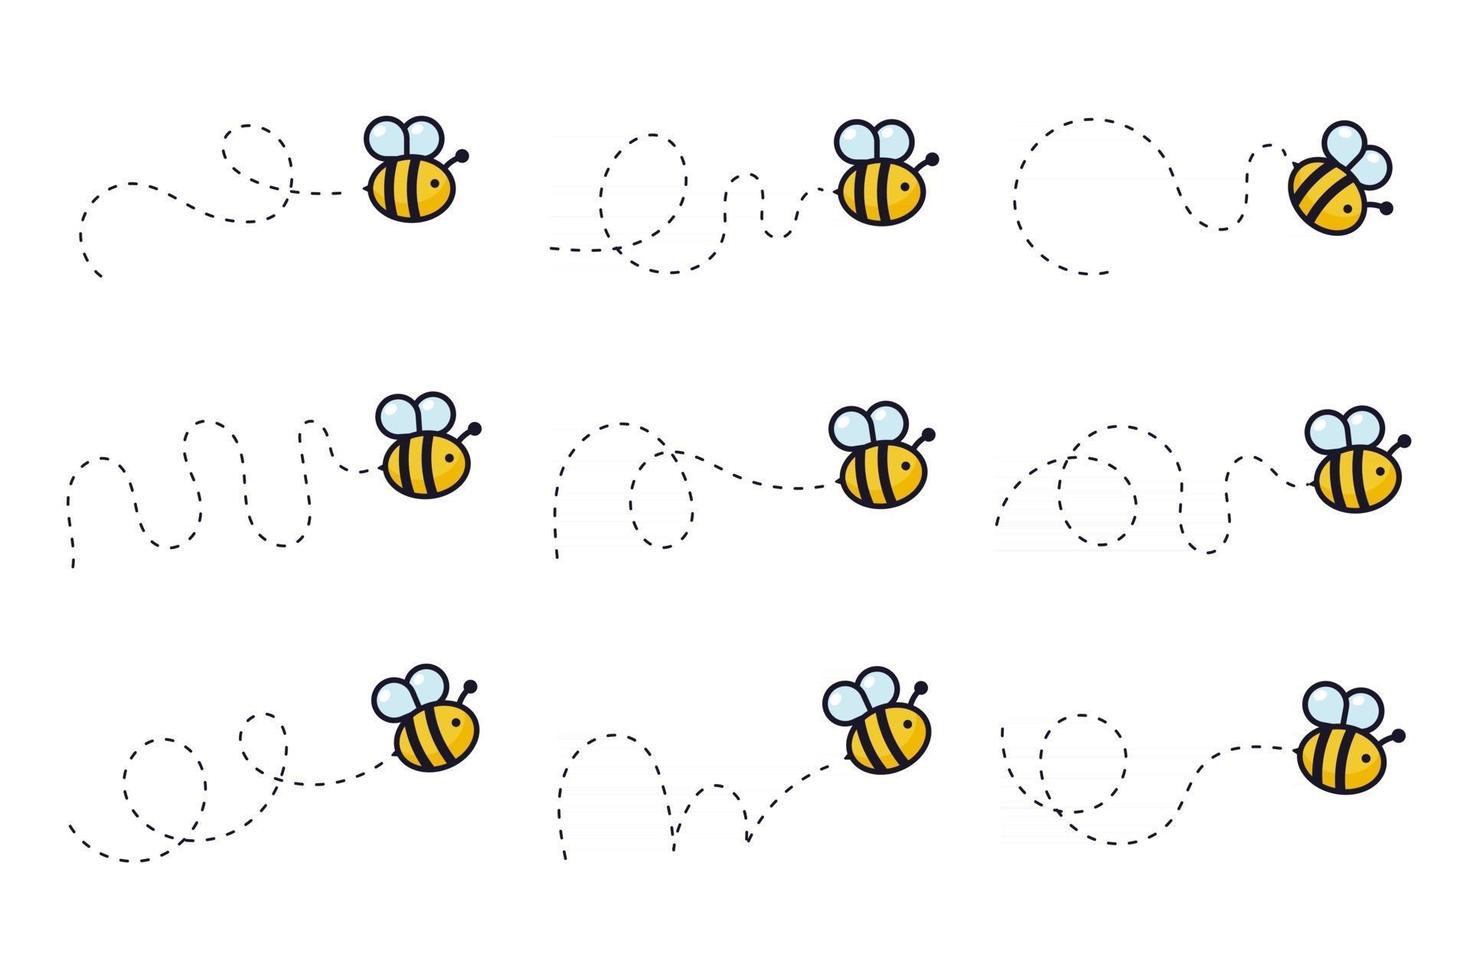 ruta de vuelo de la abeja una abeja volando en una línea de puntos la ruta de vuelo de una abeja a la miel vector